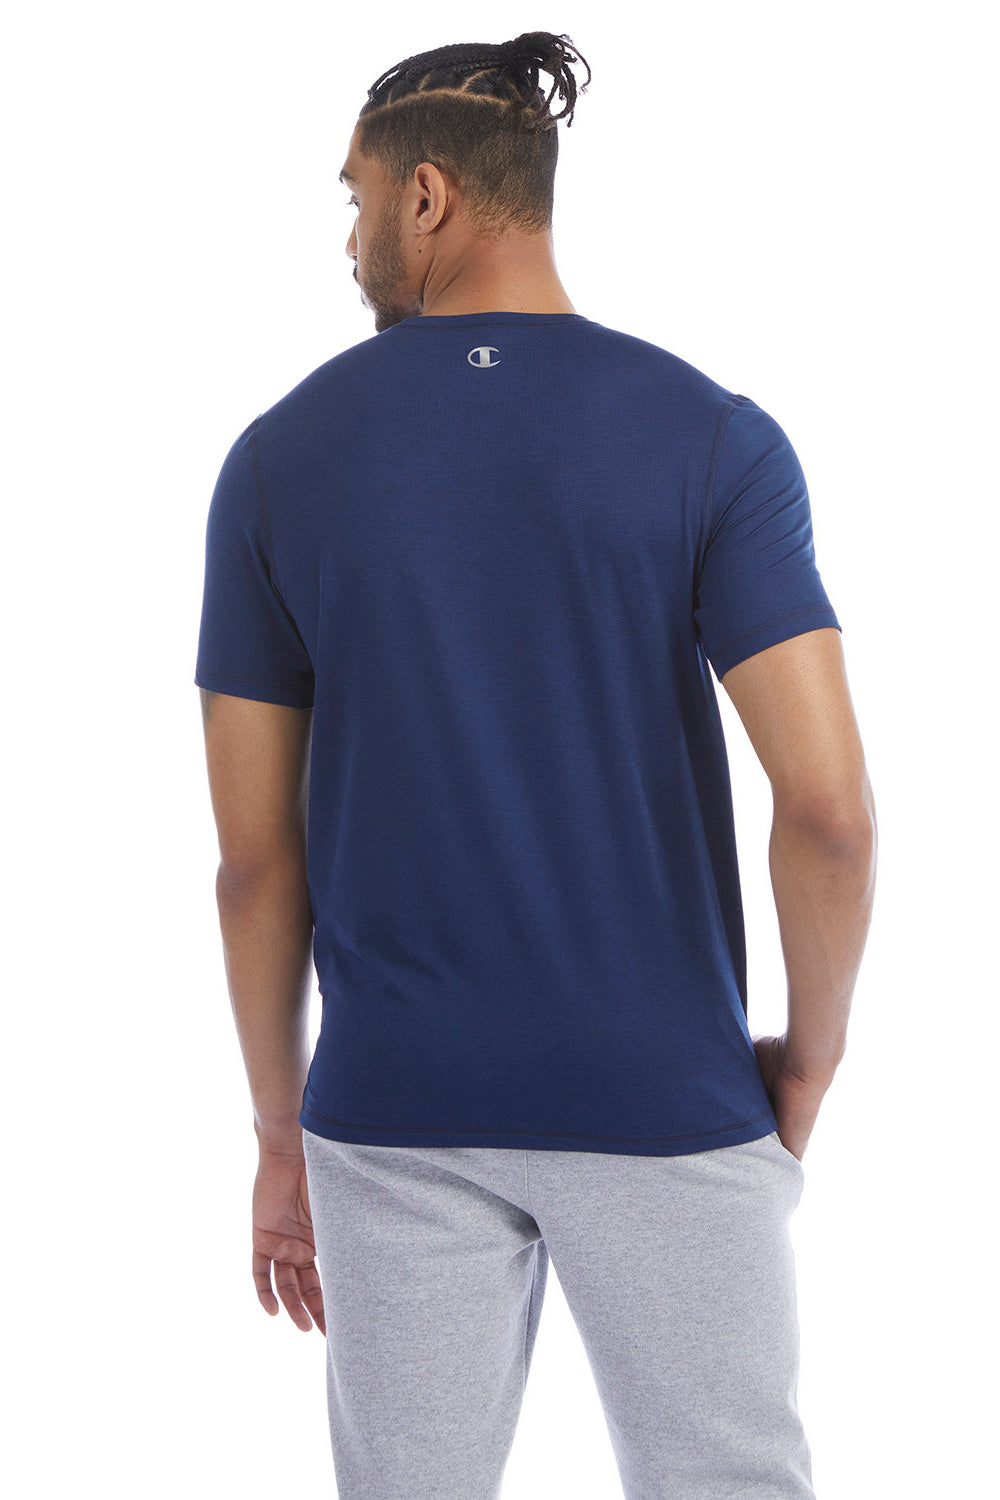 Champion CHP160 Mens Sport Short Sleeve Crewneck T-Shirt Navy Blue Model Back